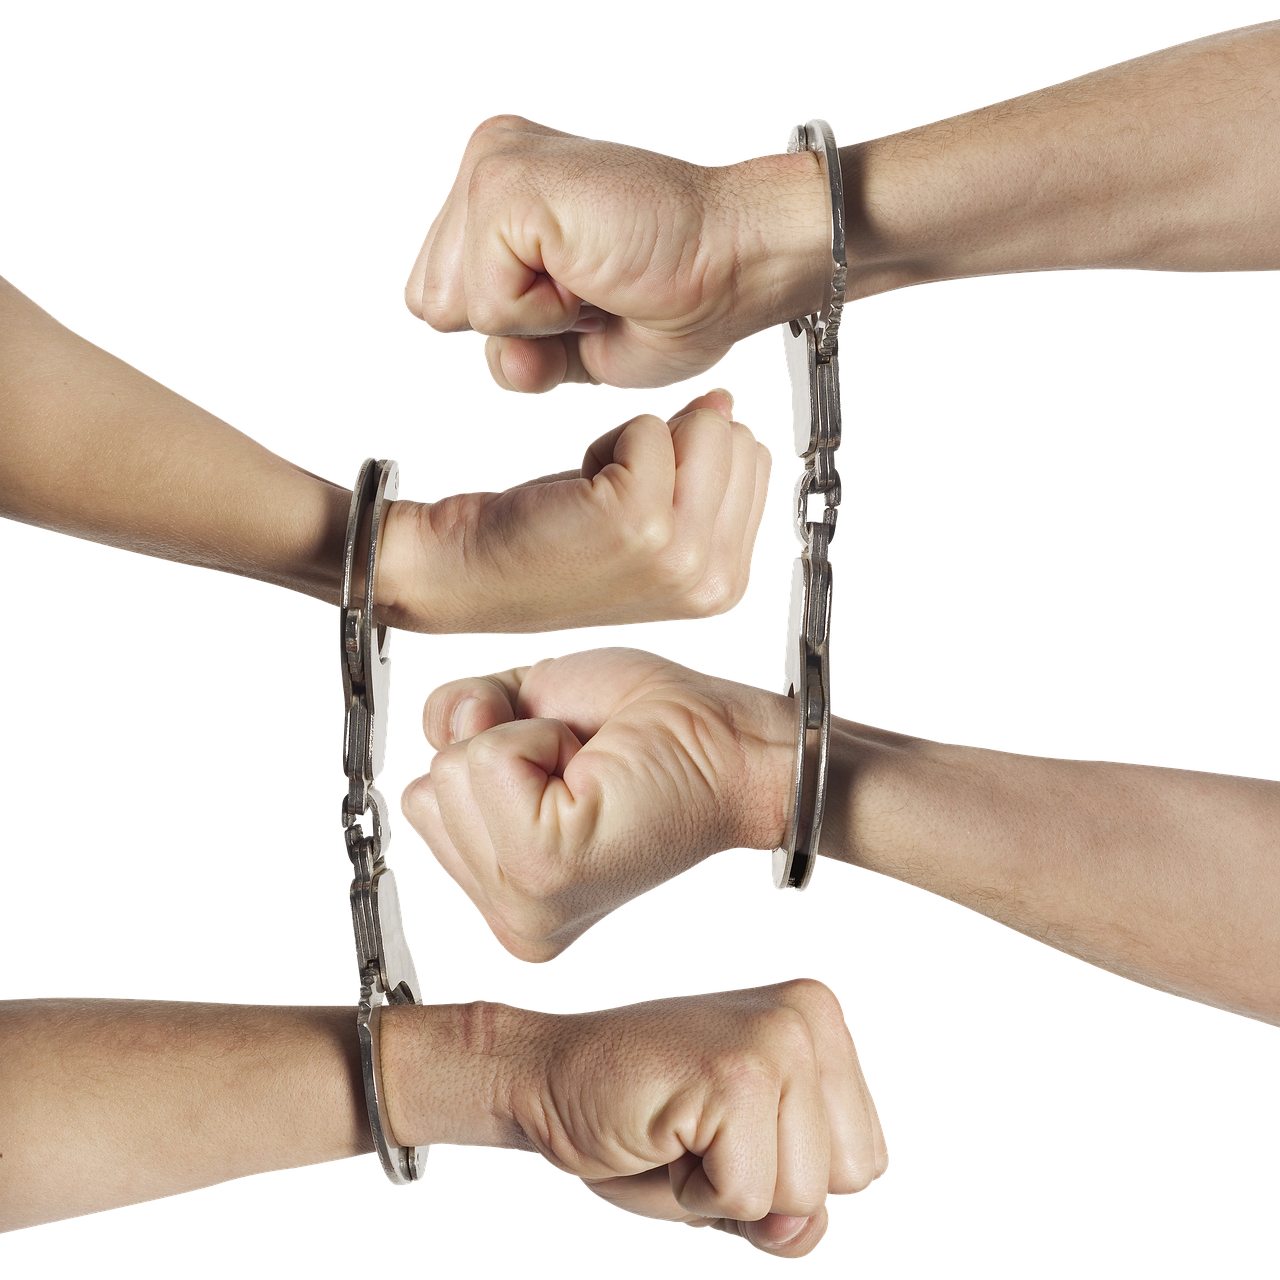 Hands Wrist Handcuffs Arrest Fist  - AlLes / Pixabay